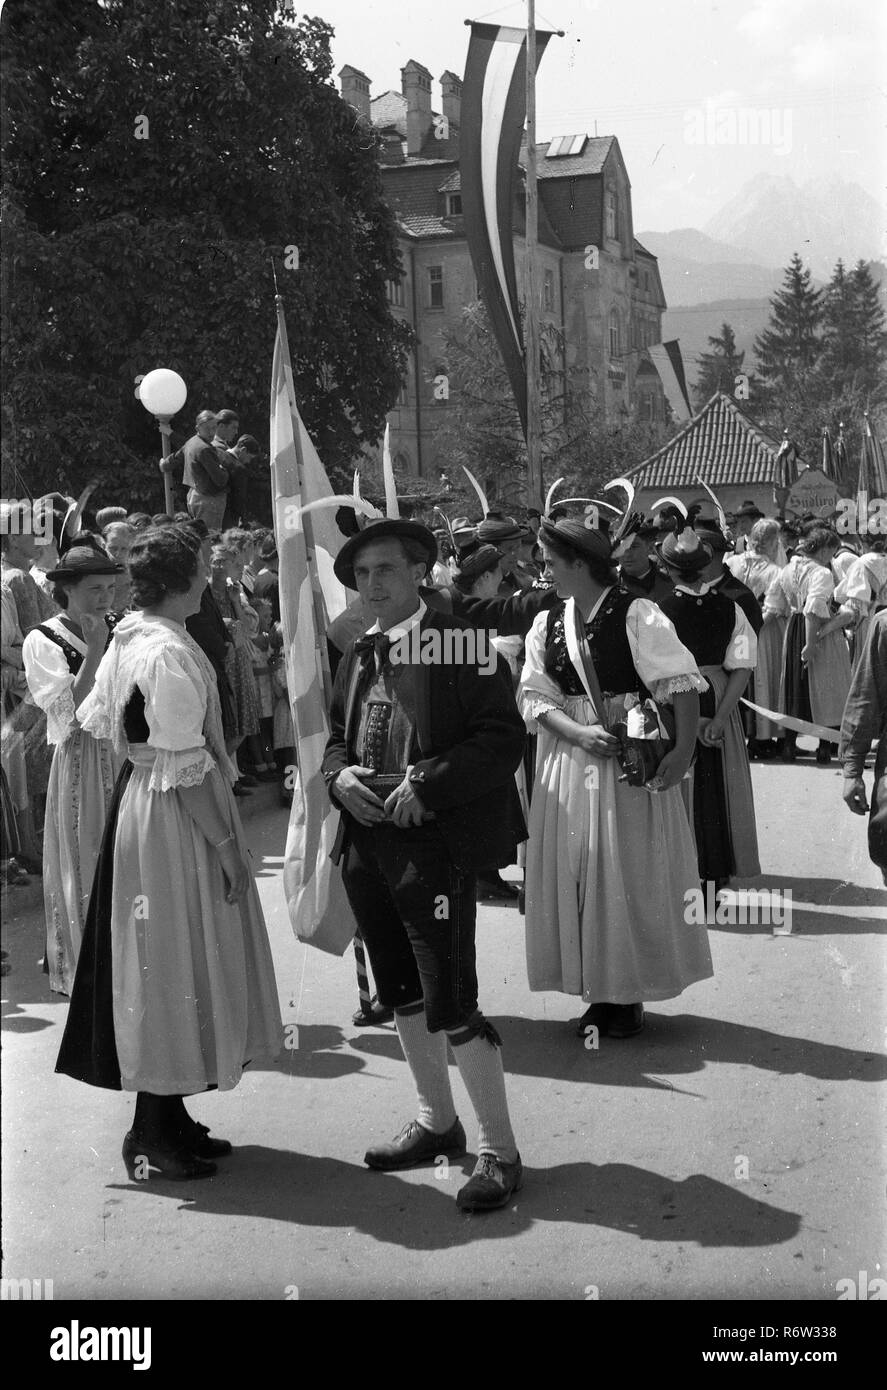 1948 Street Parade/Event, Tyrol Austria Stock Photo